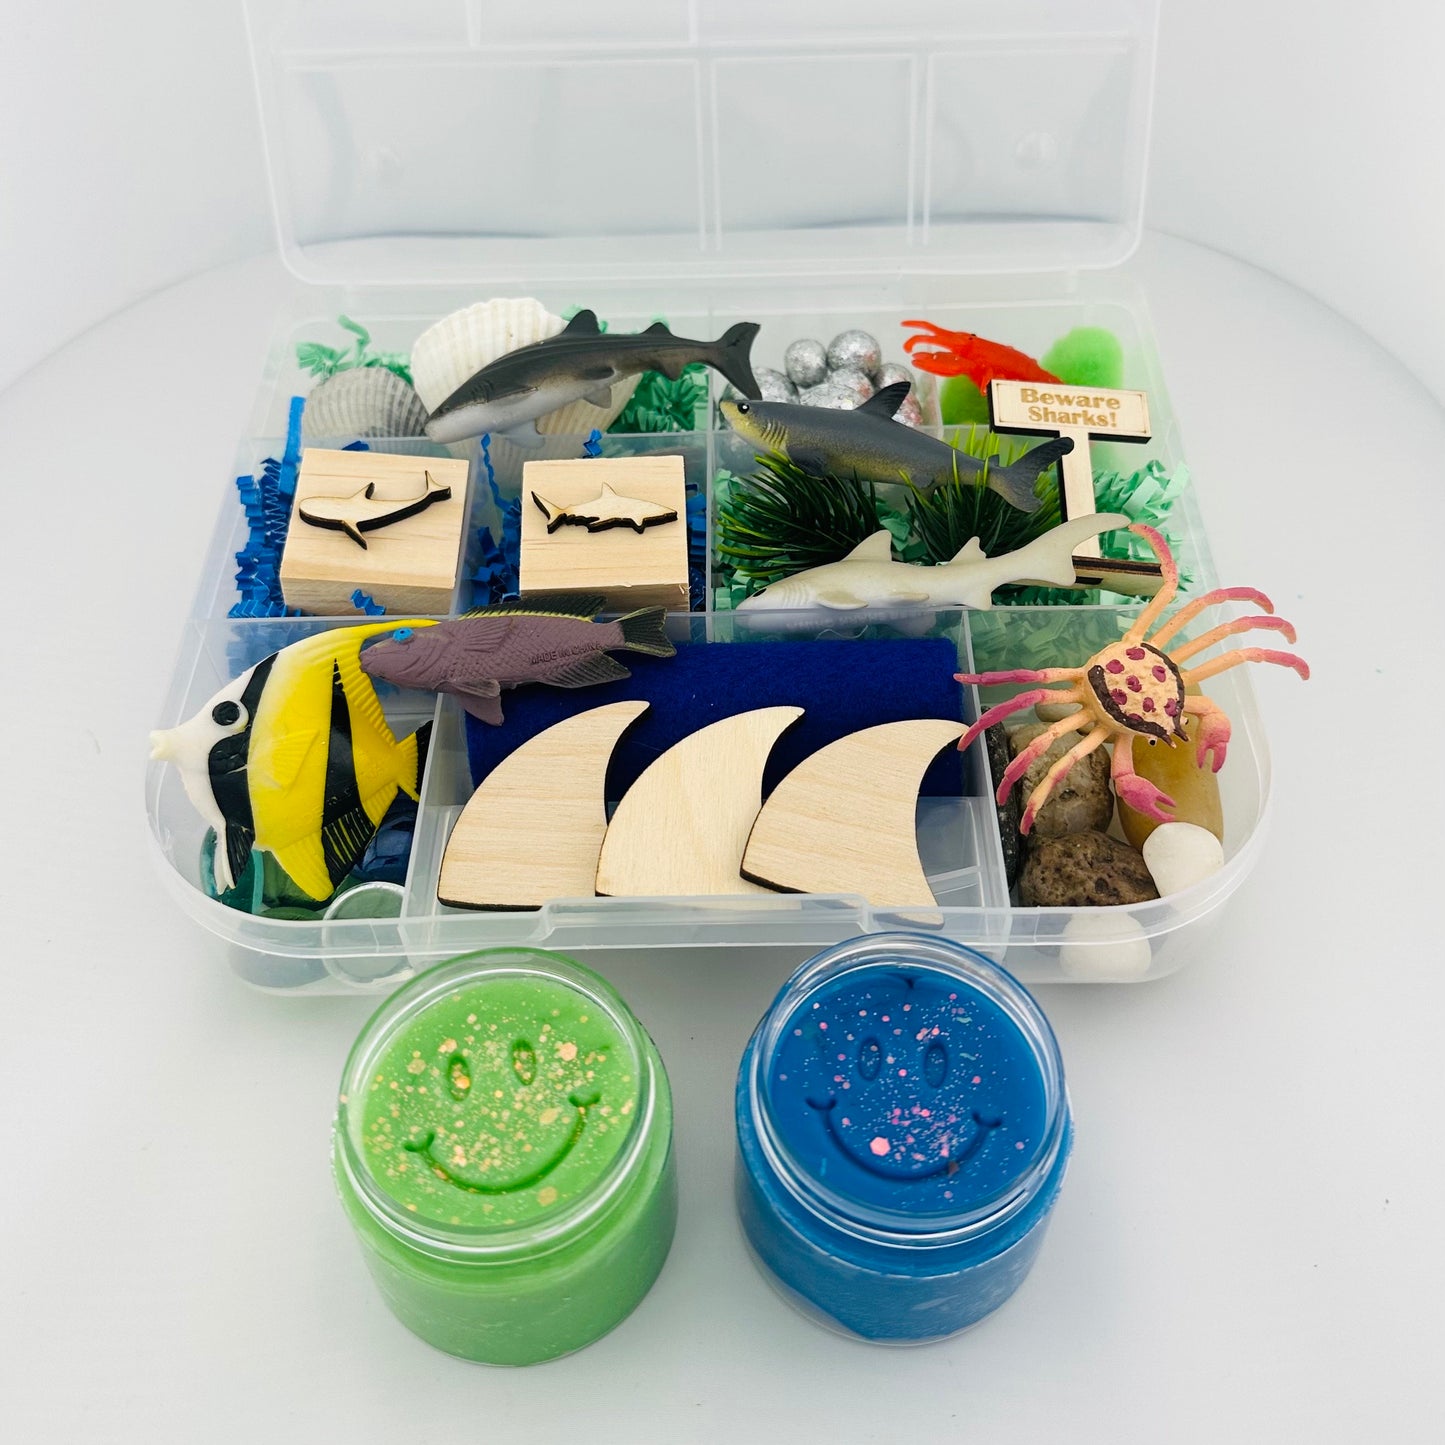 Shark Sensory Kit Play Dough, Shark Busy Box, Kinetic Sand Activity Bin, Shark Theme Gifts for Boys, Shark Week Gifts for Children